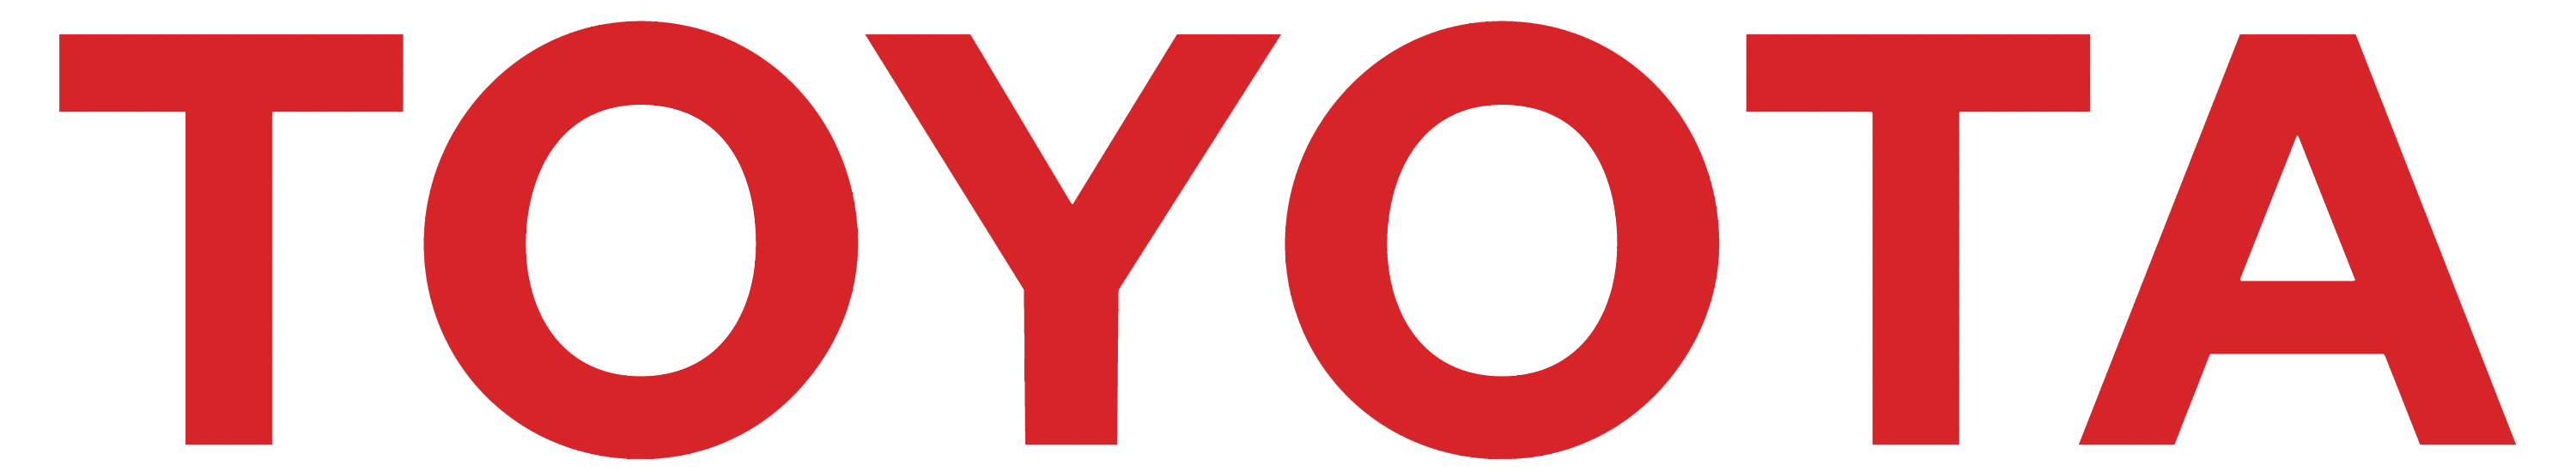 toyota logo meaning information car logo #6966